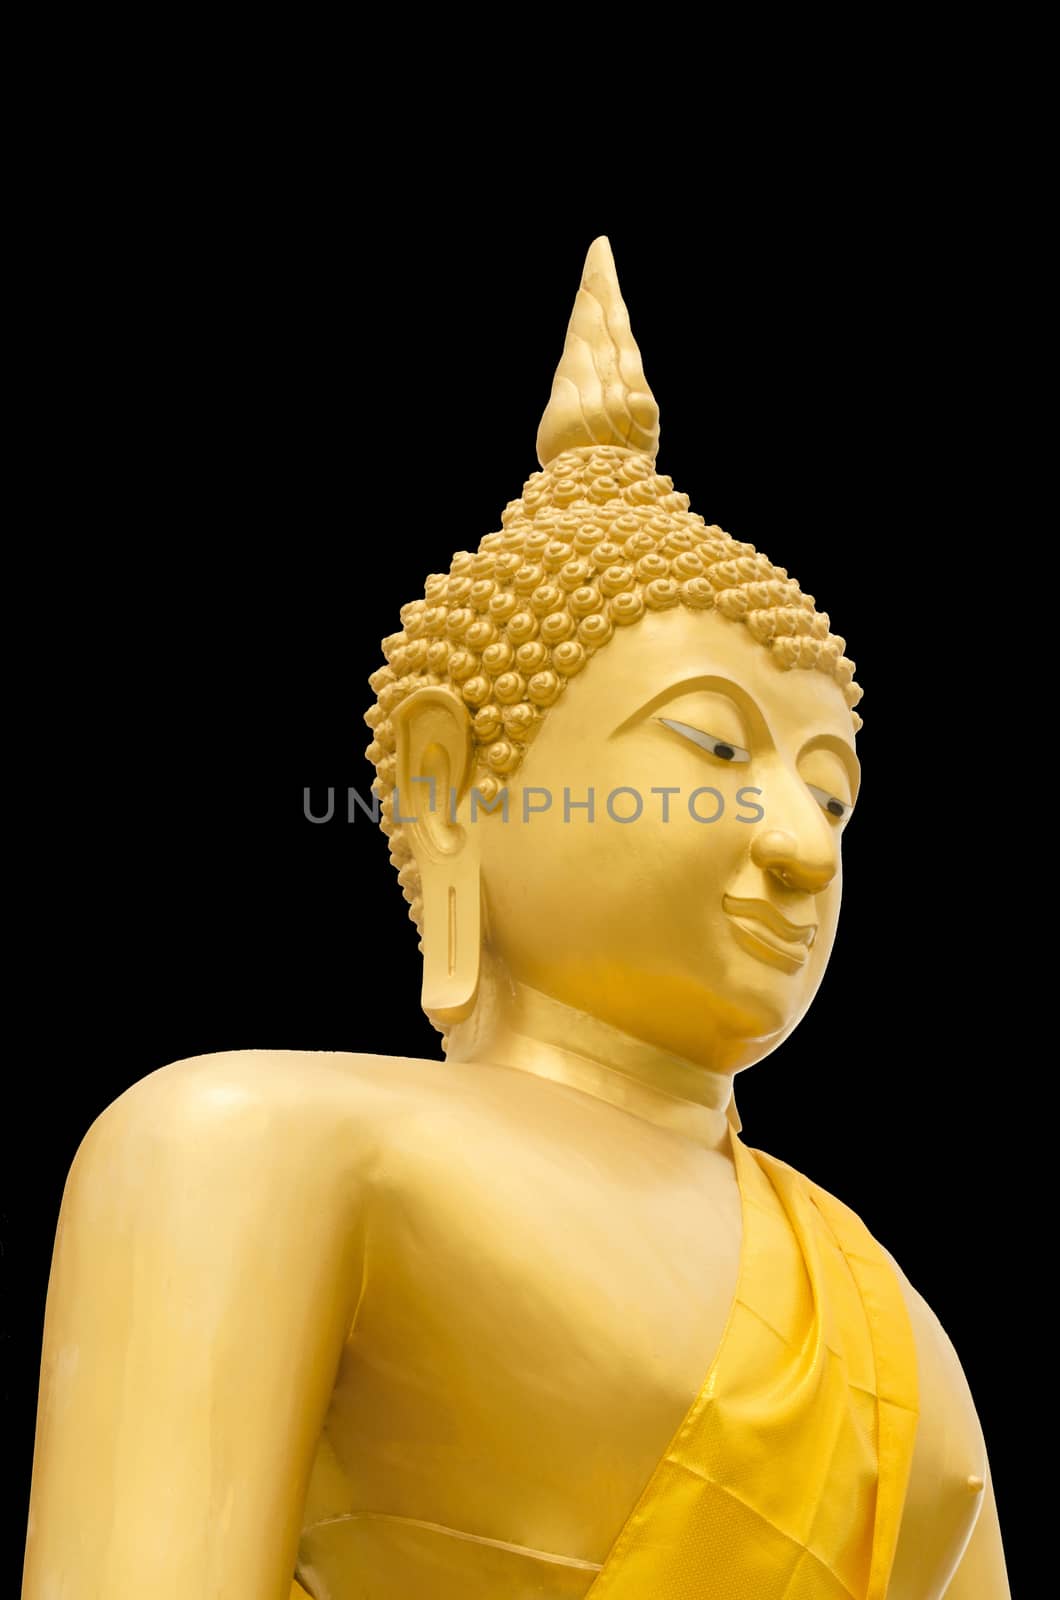 Seated Buddha Image on Black Baclground by kobfujar